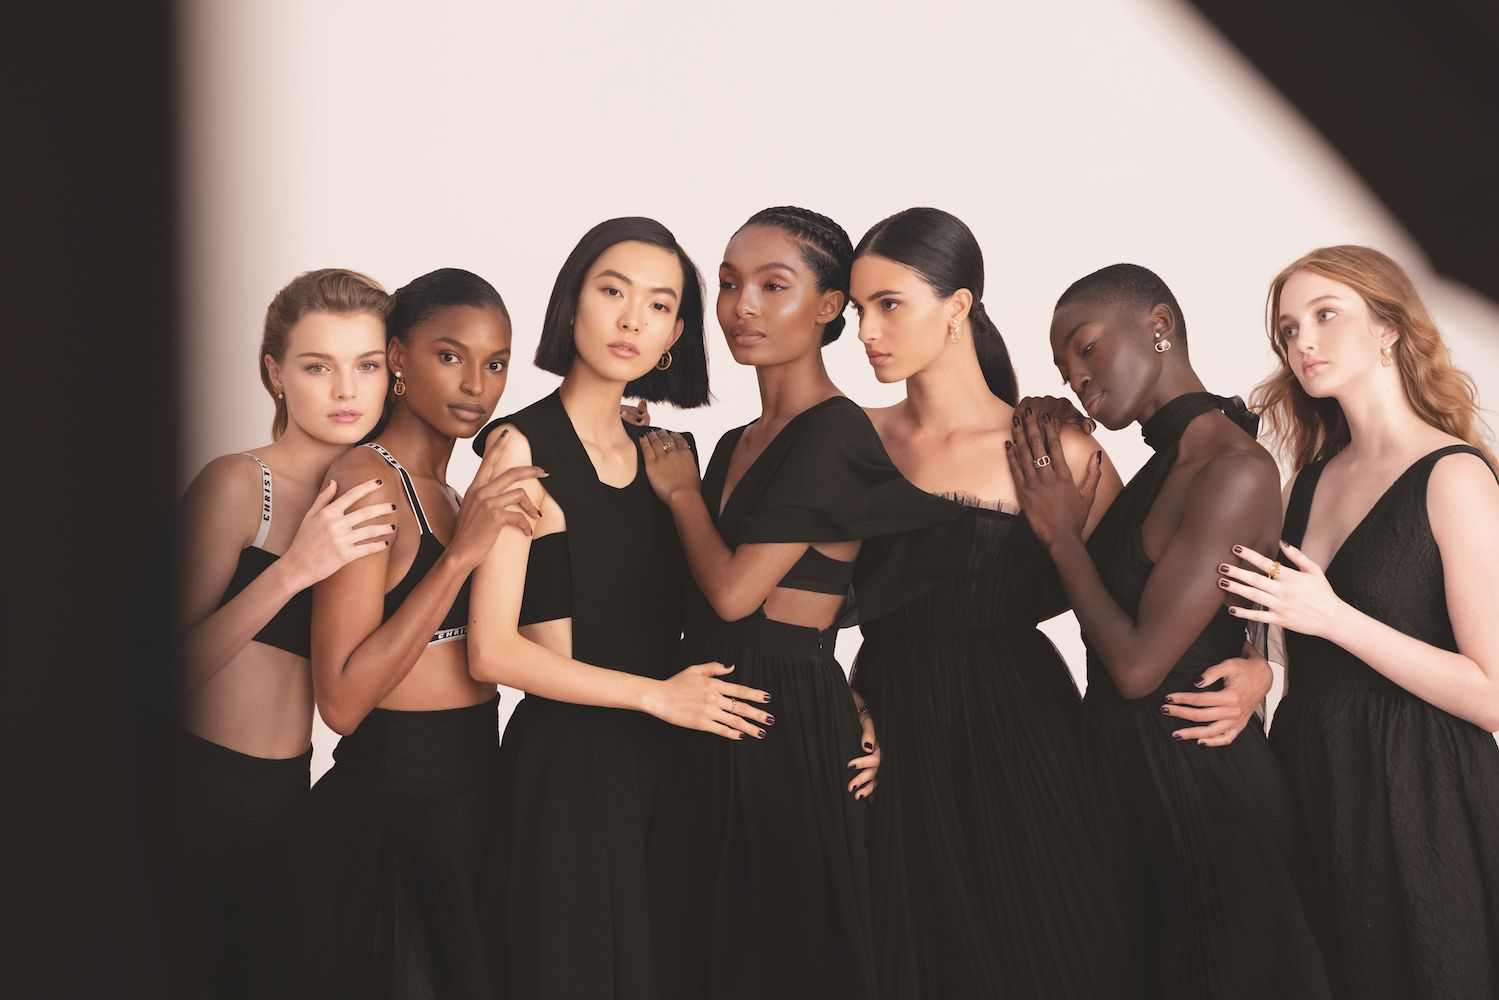 Dior unveils Yara Shahidi's first campaign as brand ambassador